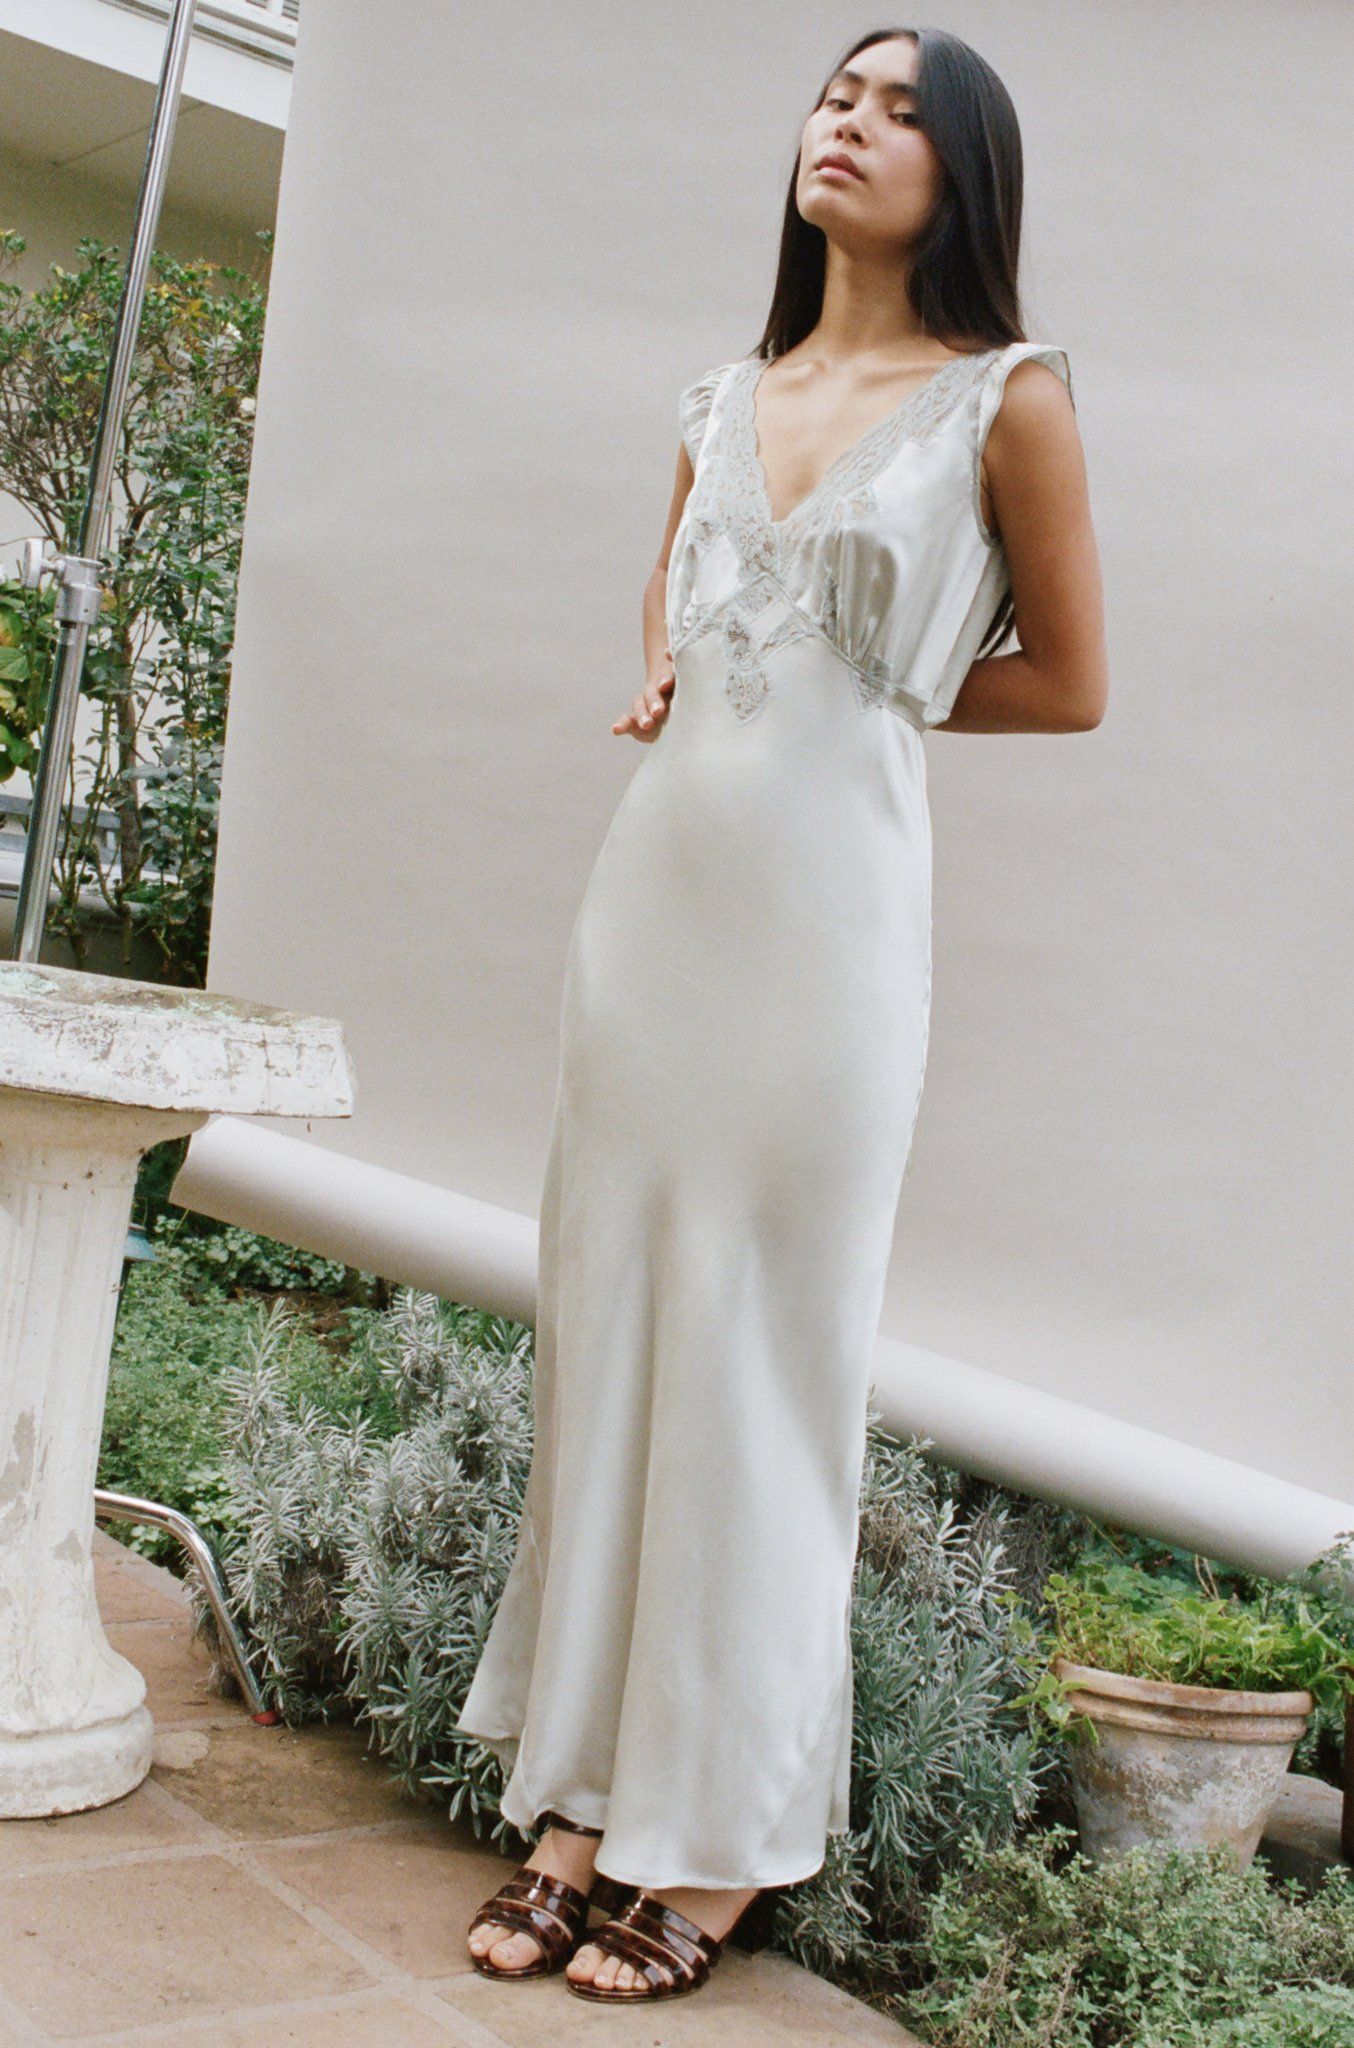 17 non-traditional dresses for the fashion-forward bride